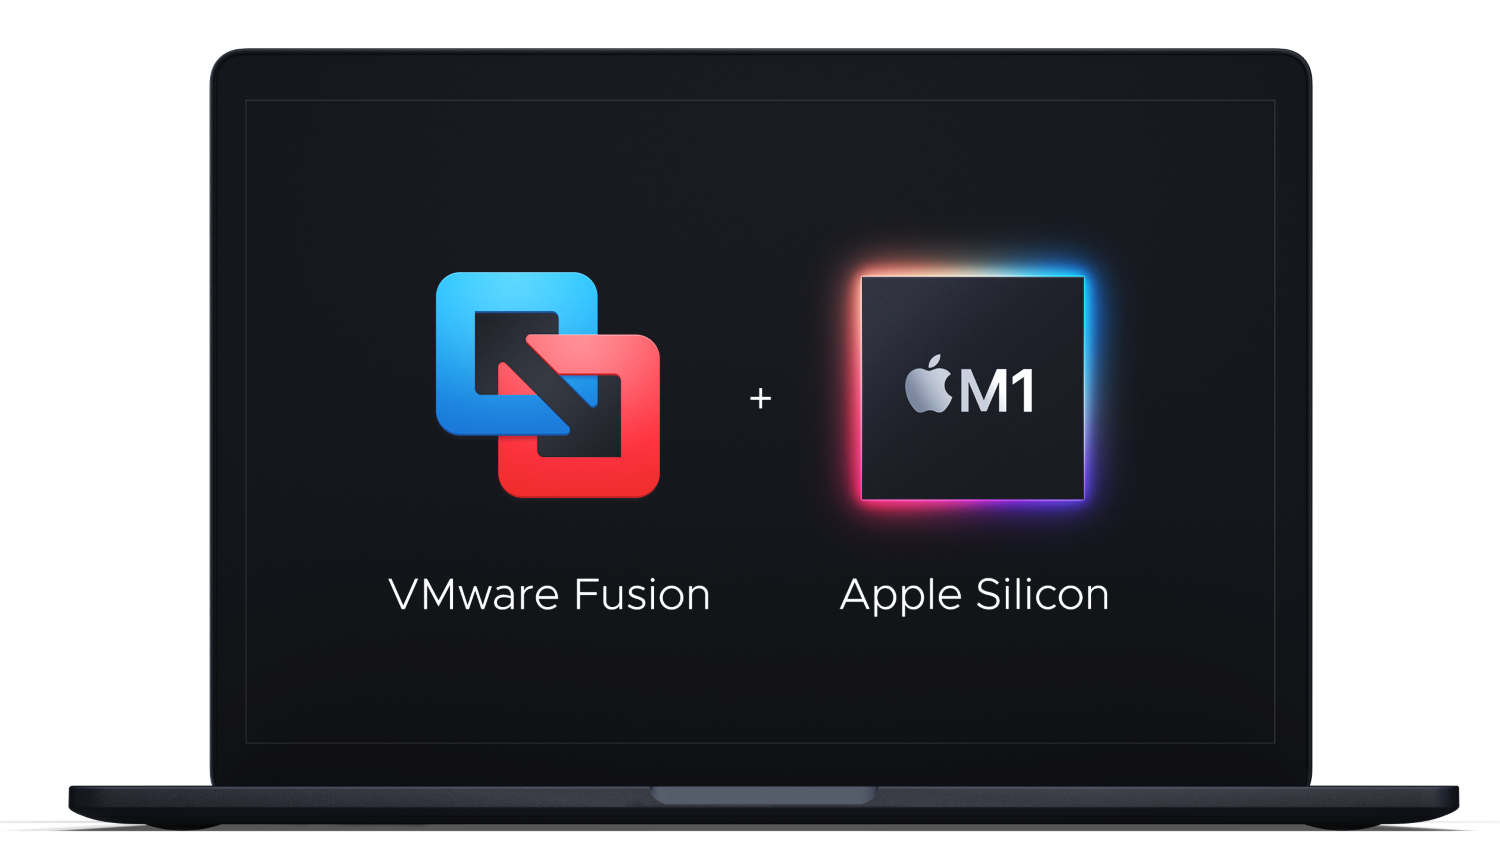 vmware fusion in macbook